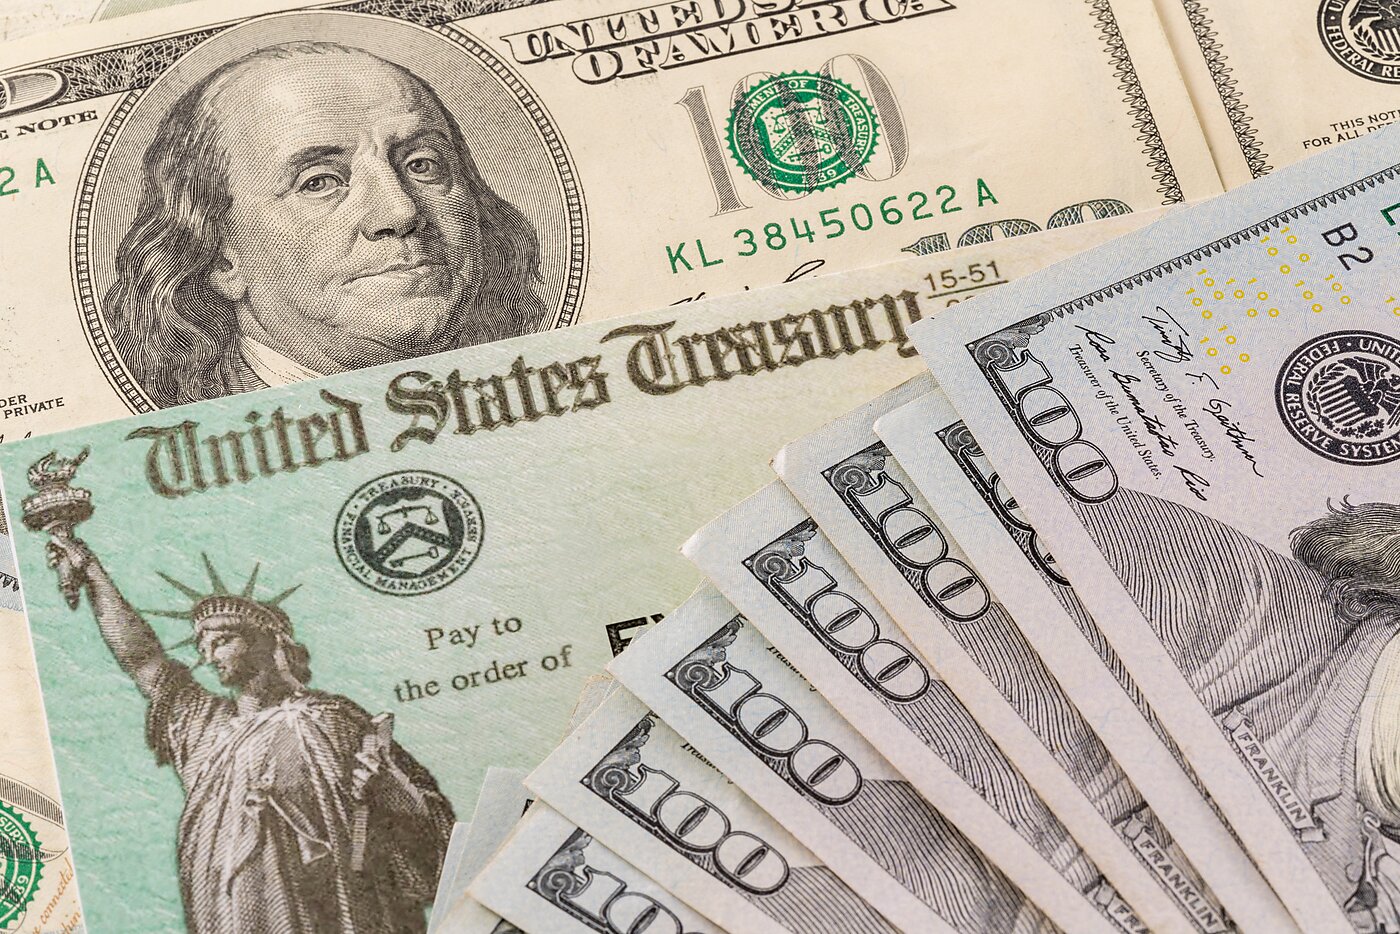 US Treasury check with hundred dollar bills